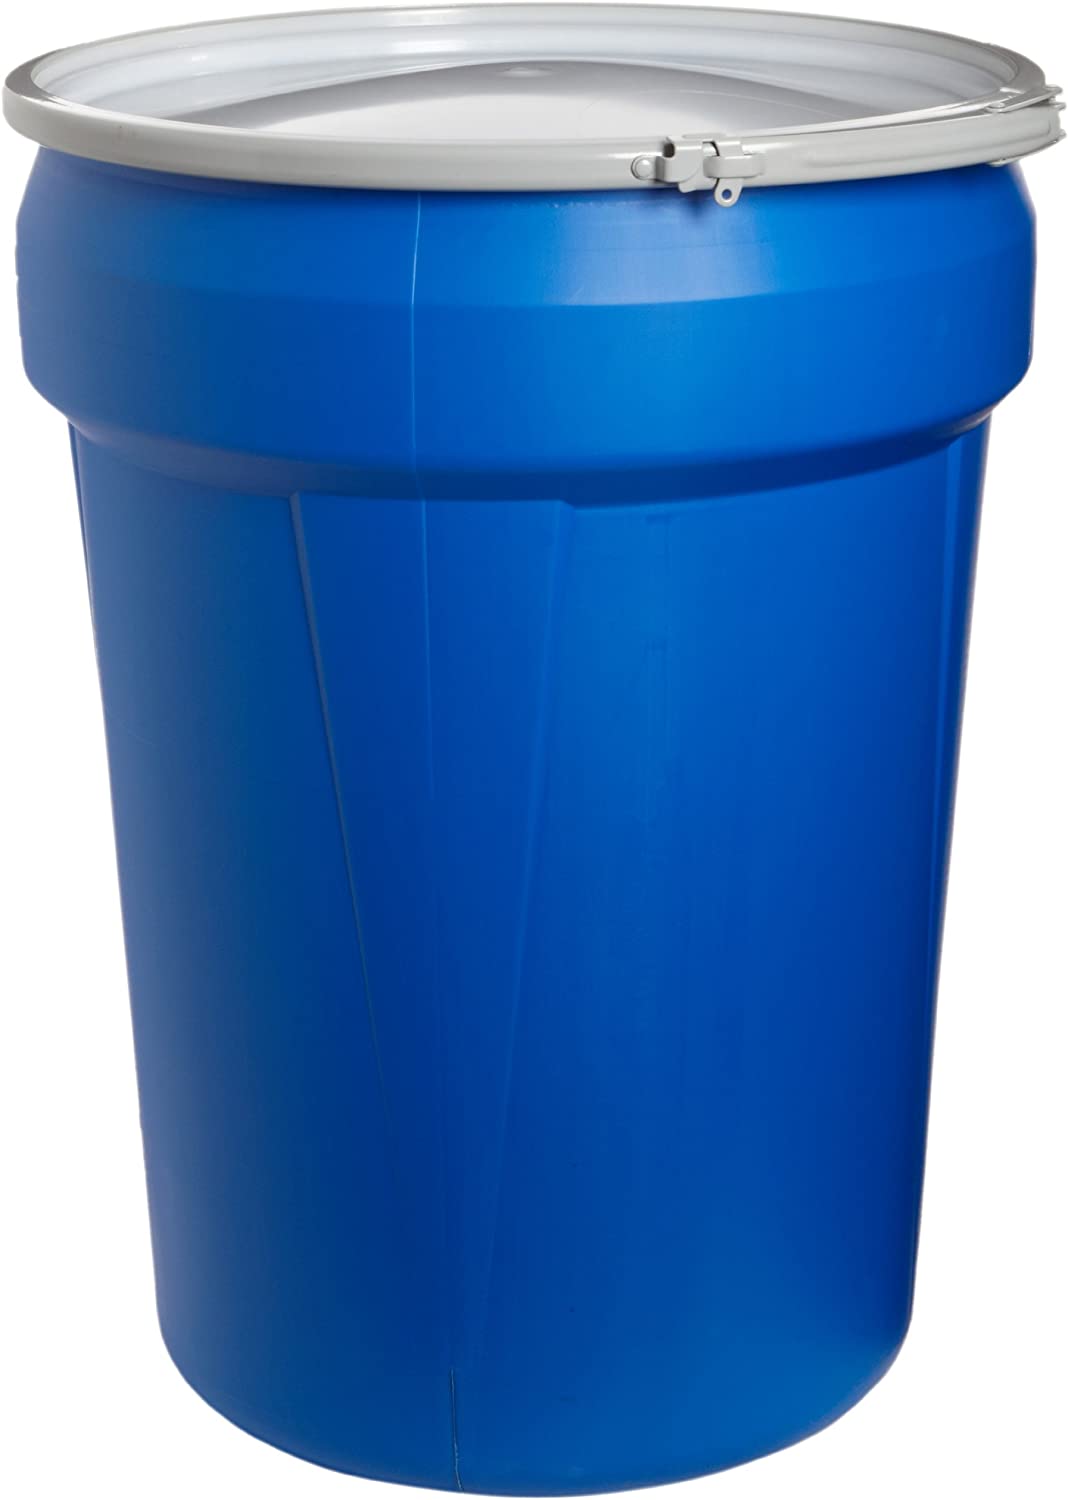 Eagle 30 Gallon High Density Polyethylene Lab Pack Barrel Drum with Metal Lever-lock Lid, 28.5" Height, 21.25" Diameter, Blue, 1601MB